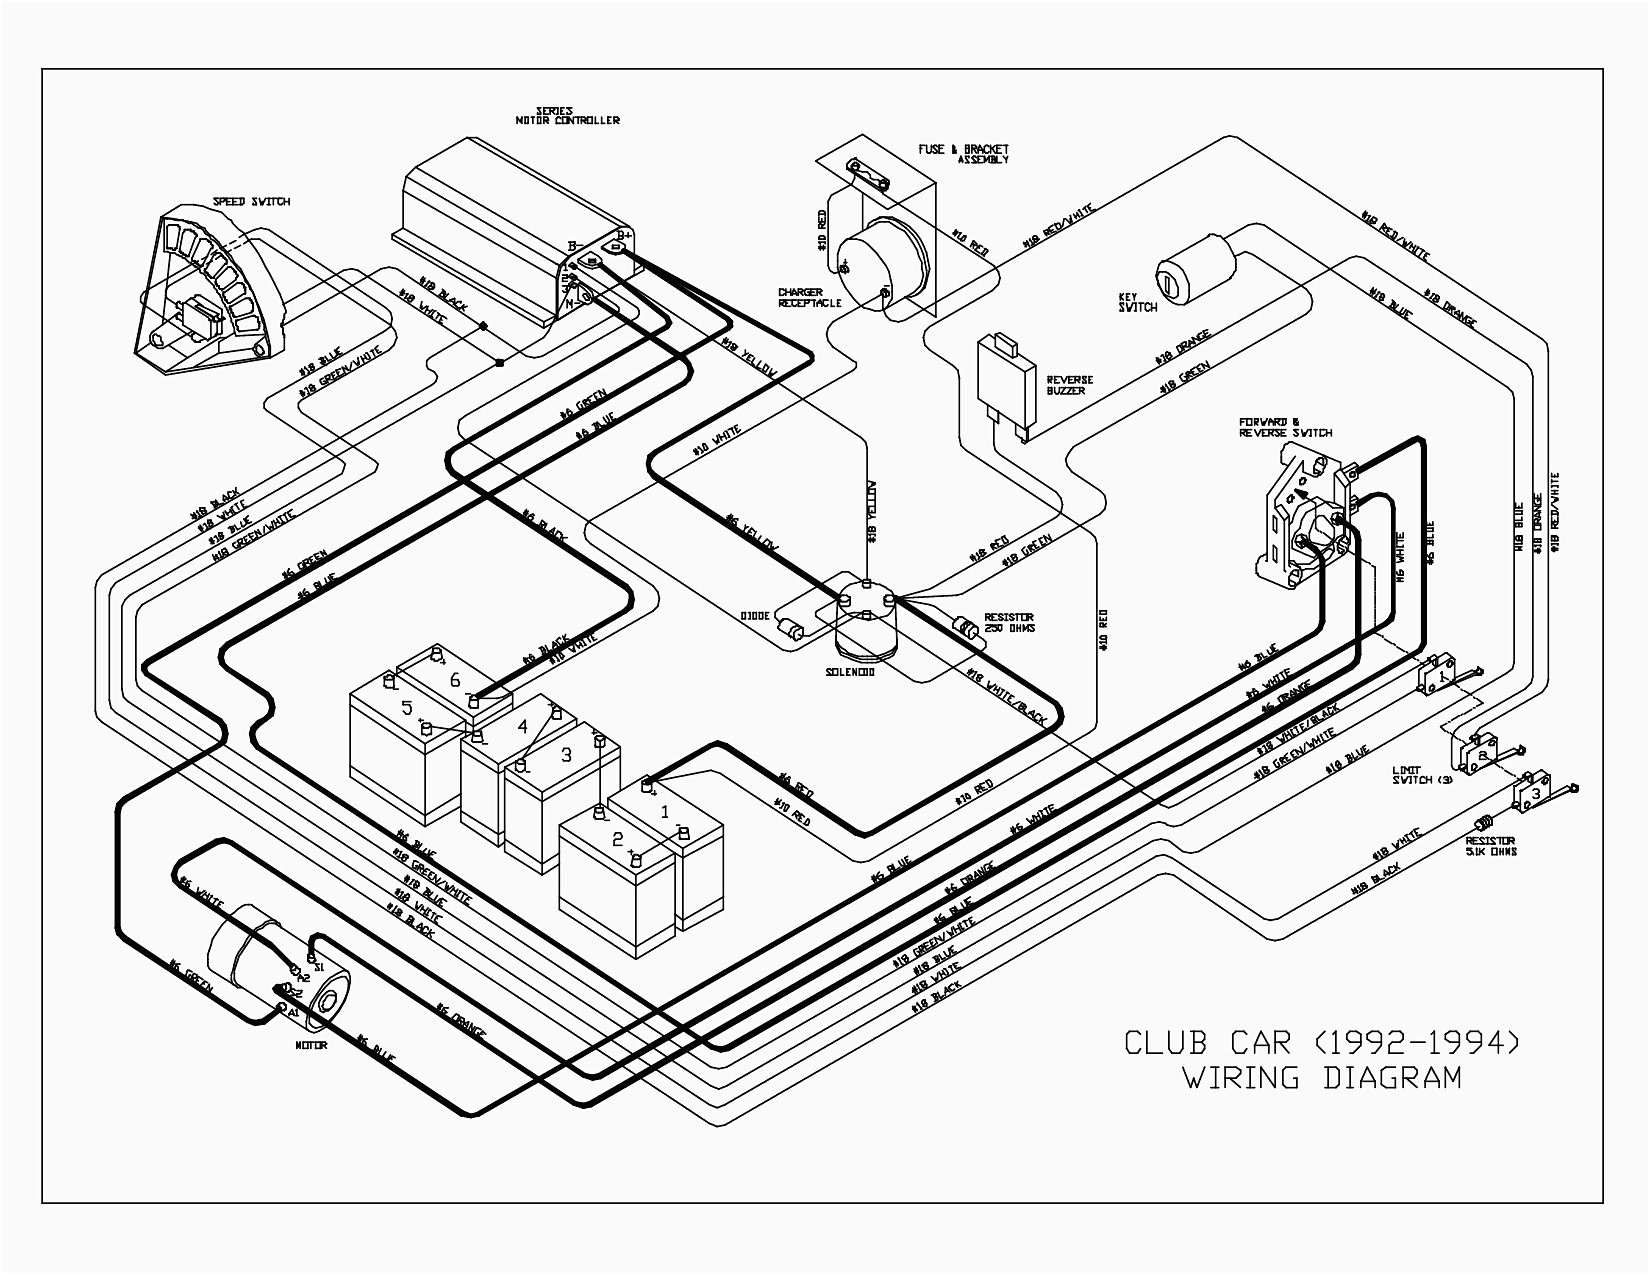 wiring diagram for club car golf cart save wiring diagram for club of club car golf cart wiring diagram 1